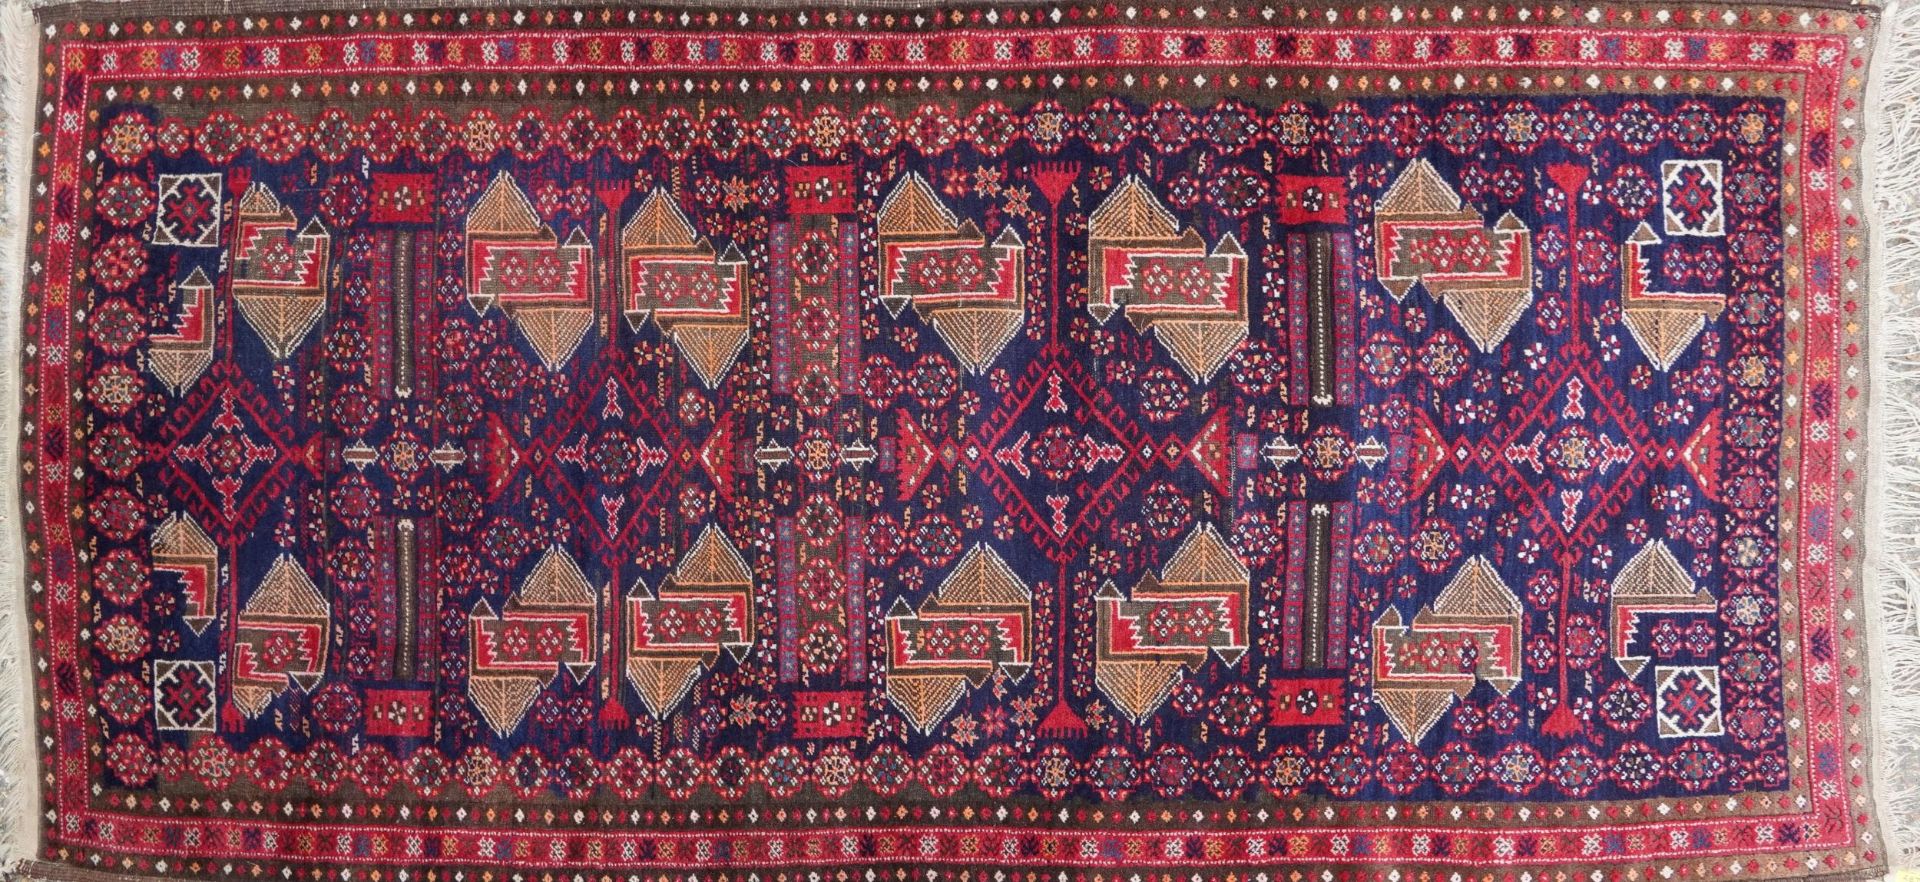 Rectangular Persian rug having an allover repeat geometric design, 230cm x 110cm : For further